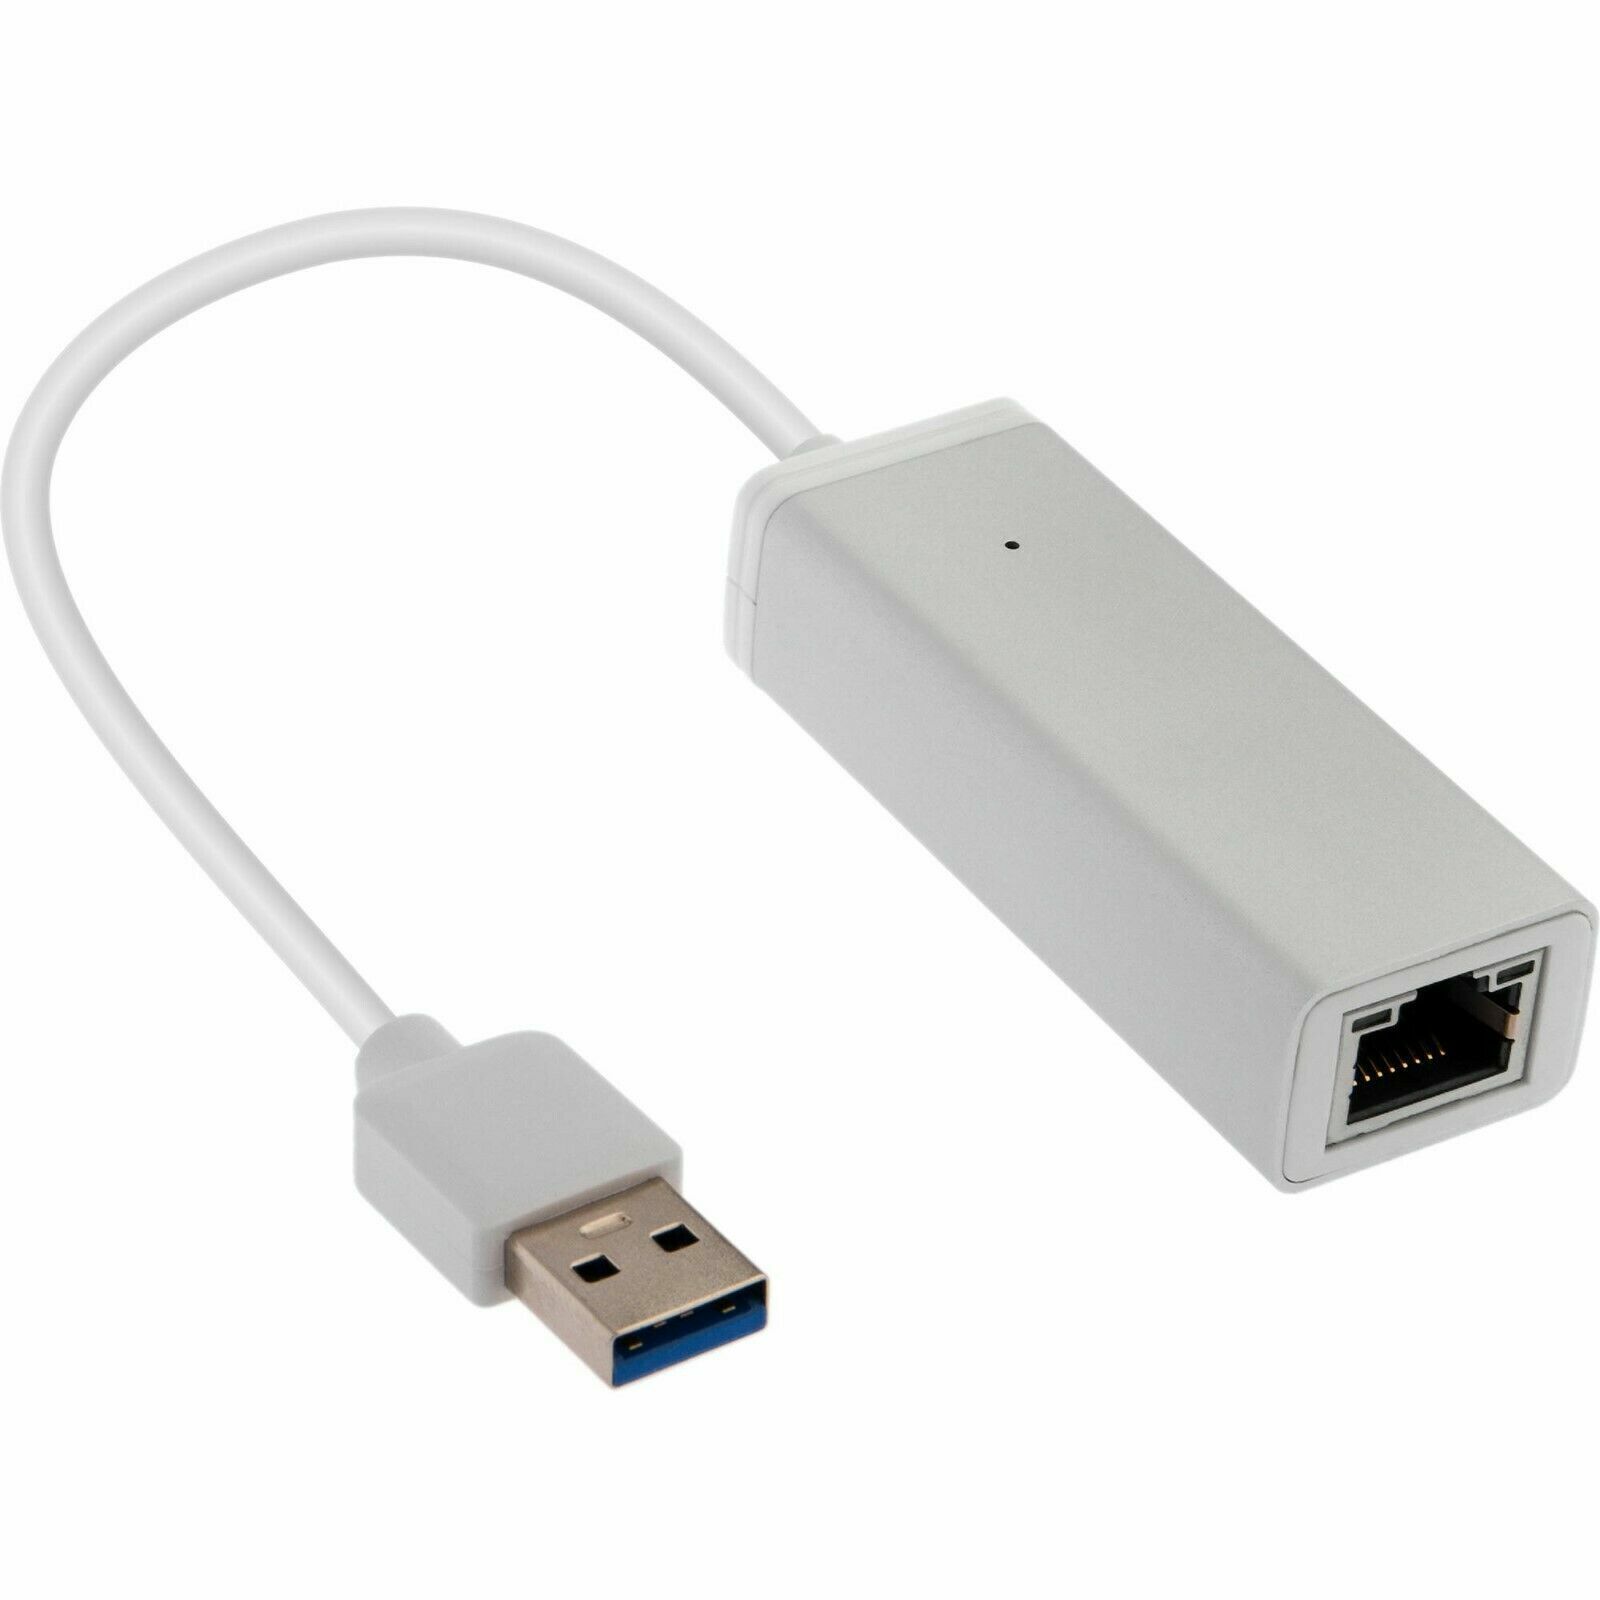 USB 2.0 Gigabit Ethernet LAN RJ45 1000Mbps Network Adapter For Windows PC Mac